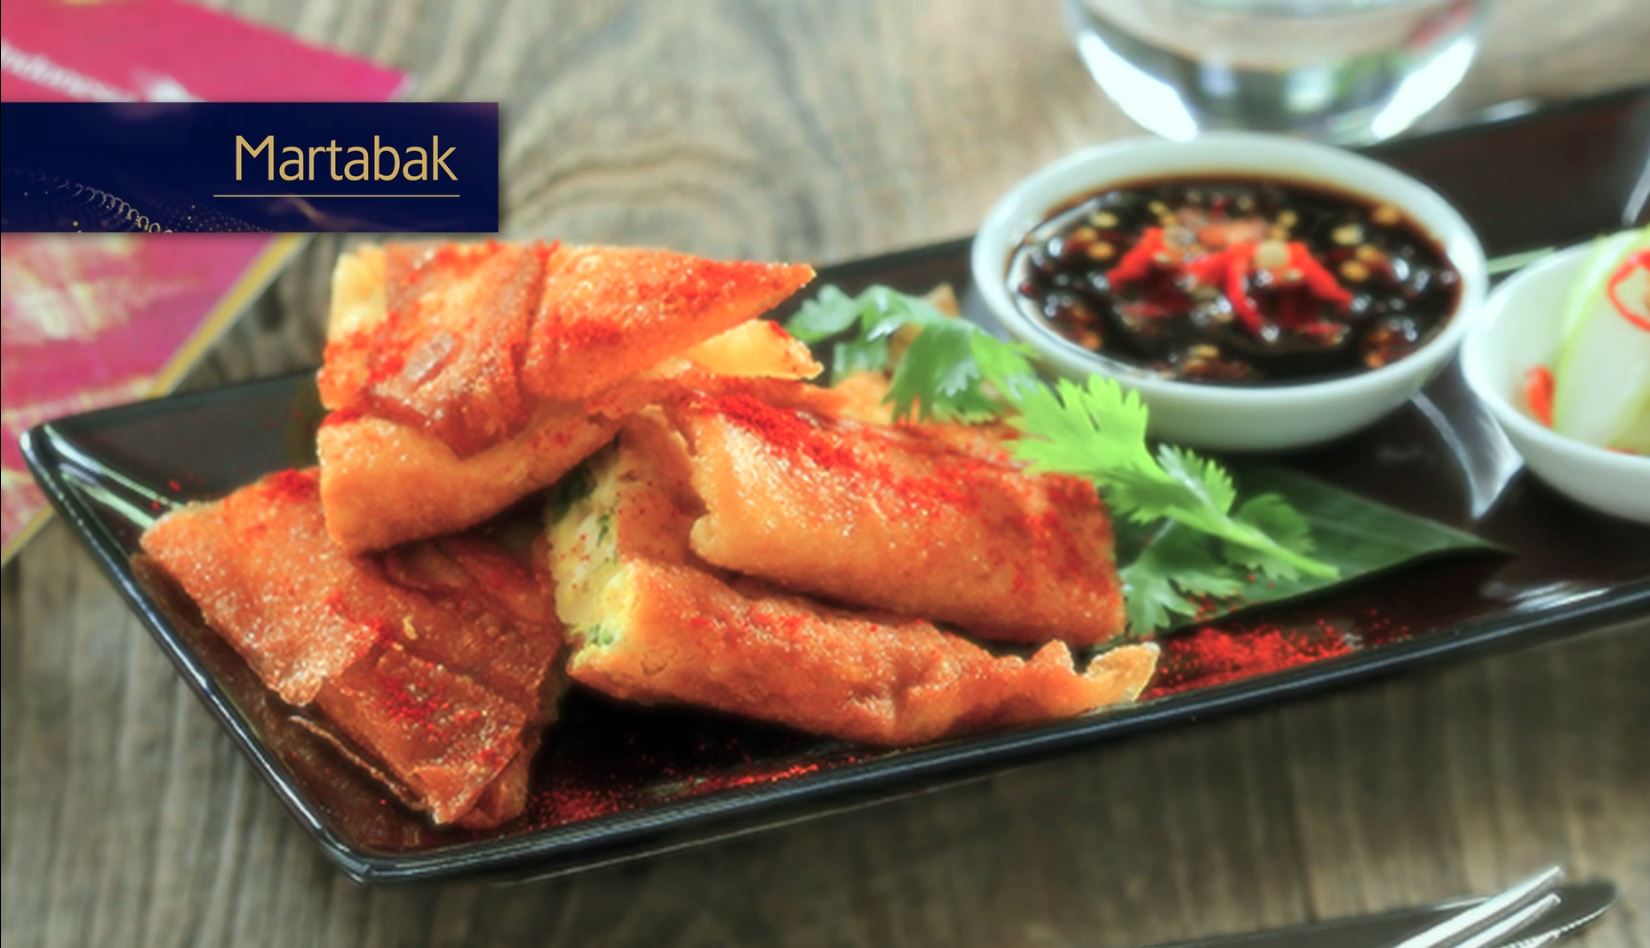 Garuda Indonesia – Experience 5-Star Sky Dining From Chef Will Meyrick